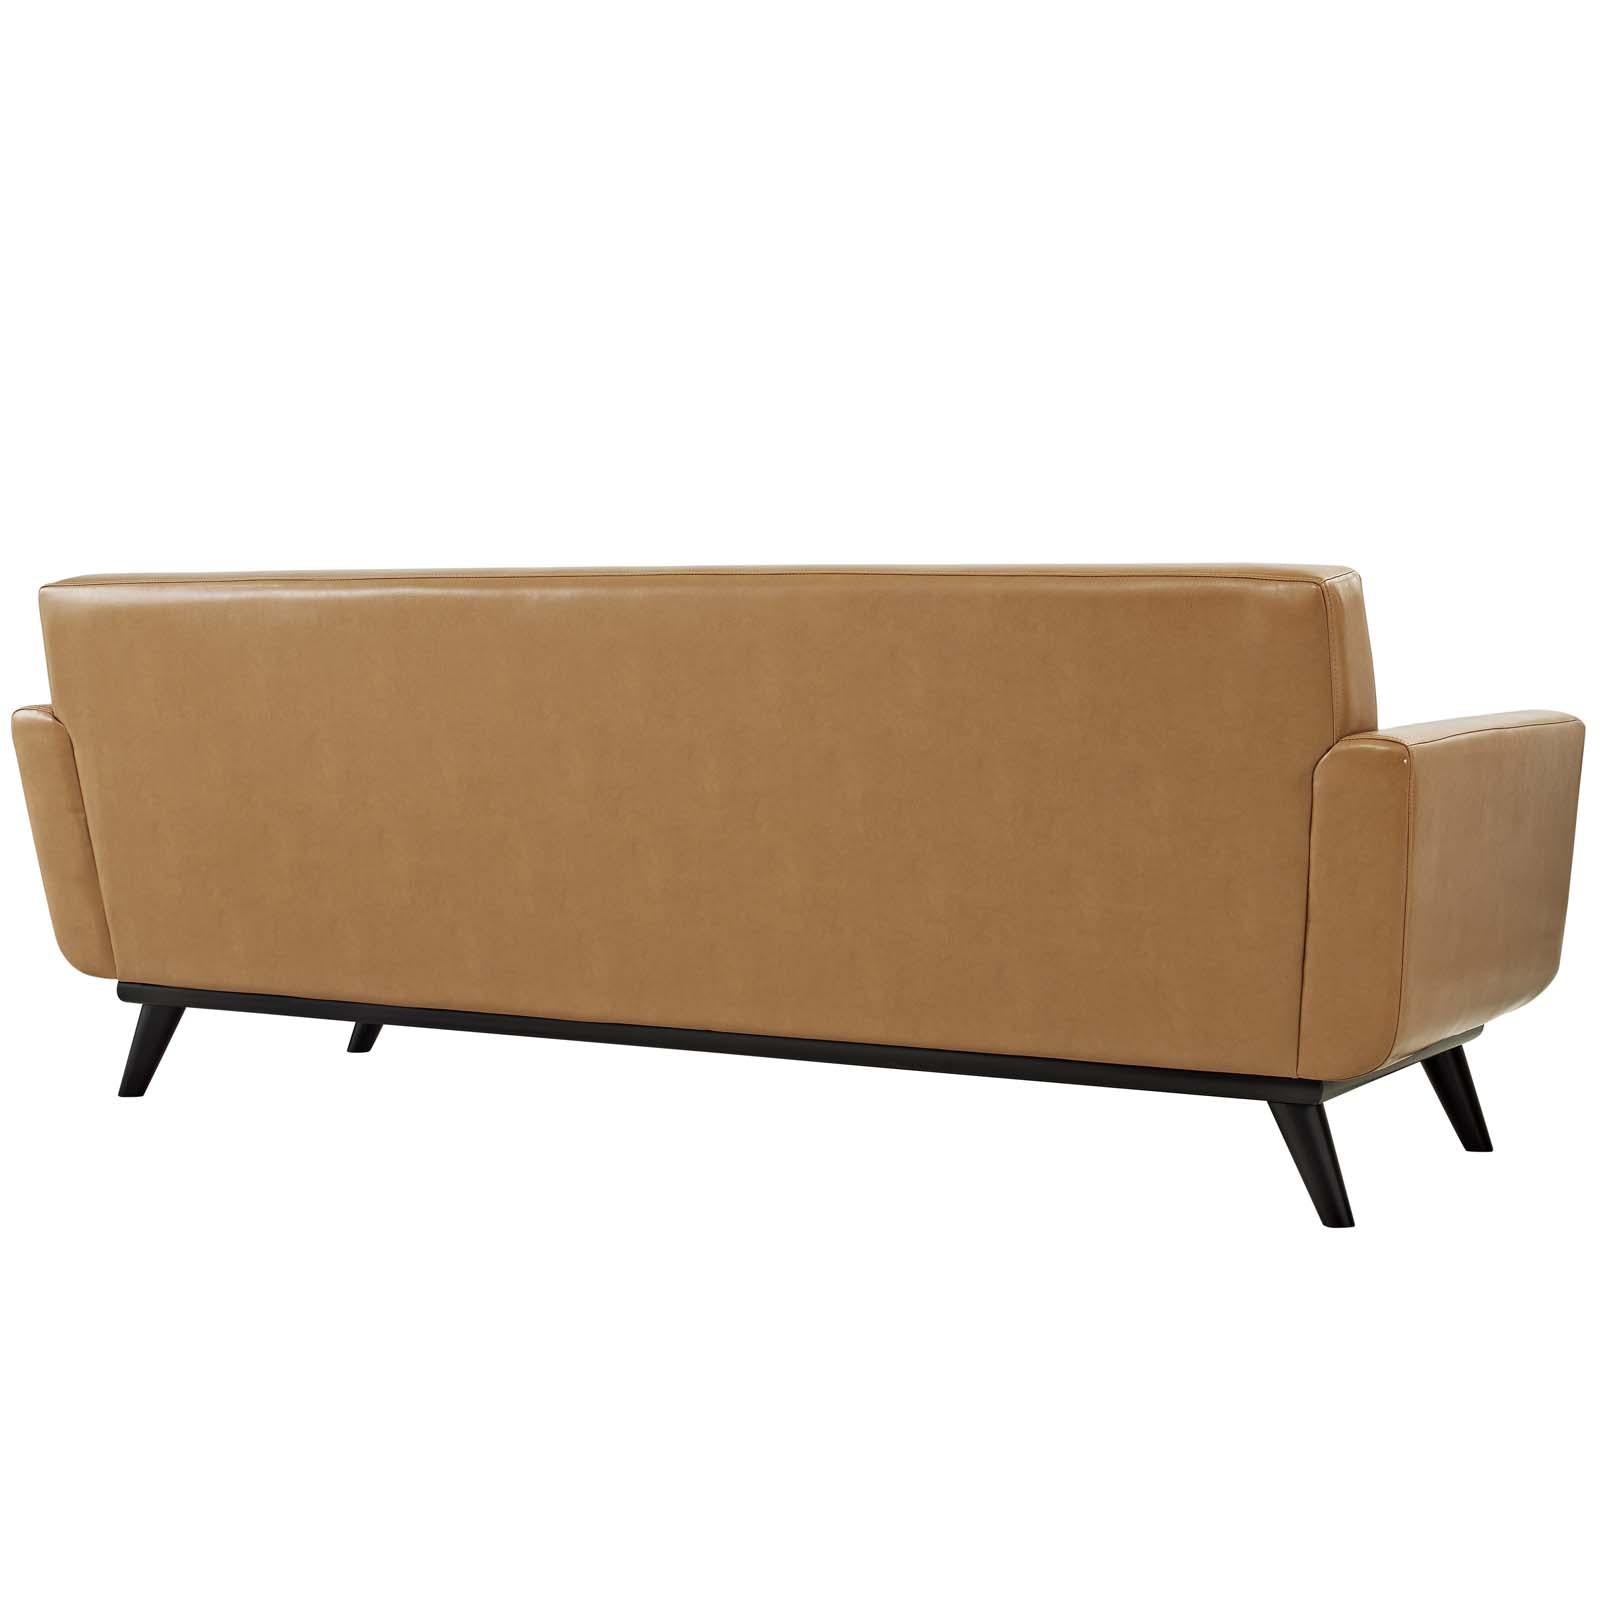 Modway Furniture Modern Engage Bonded Leather Sofa - EEI-1338